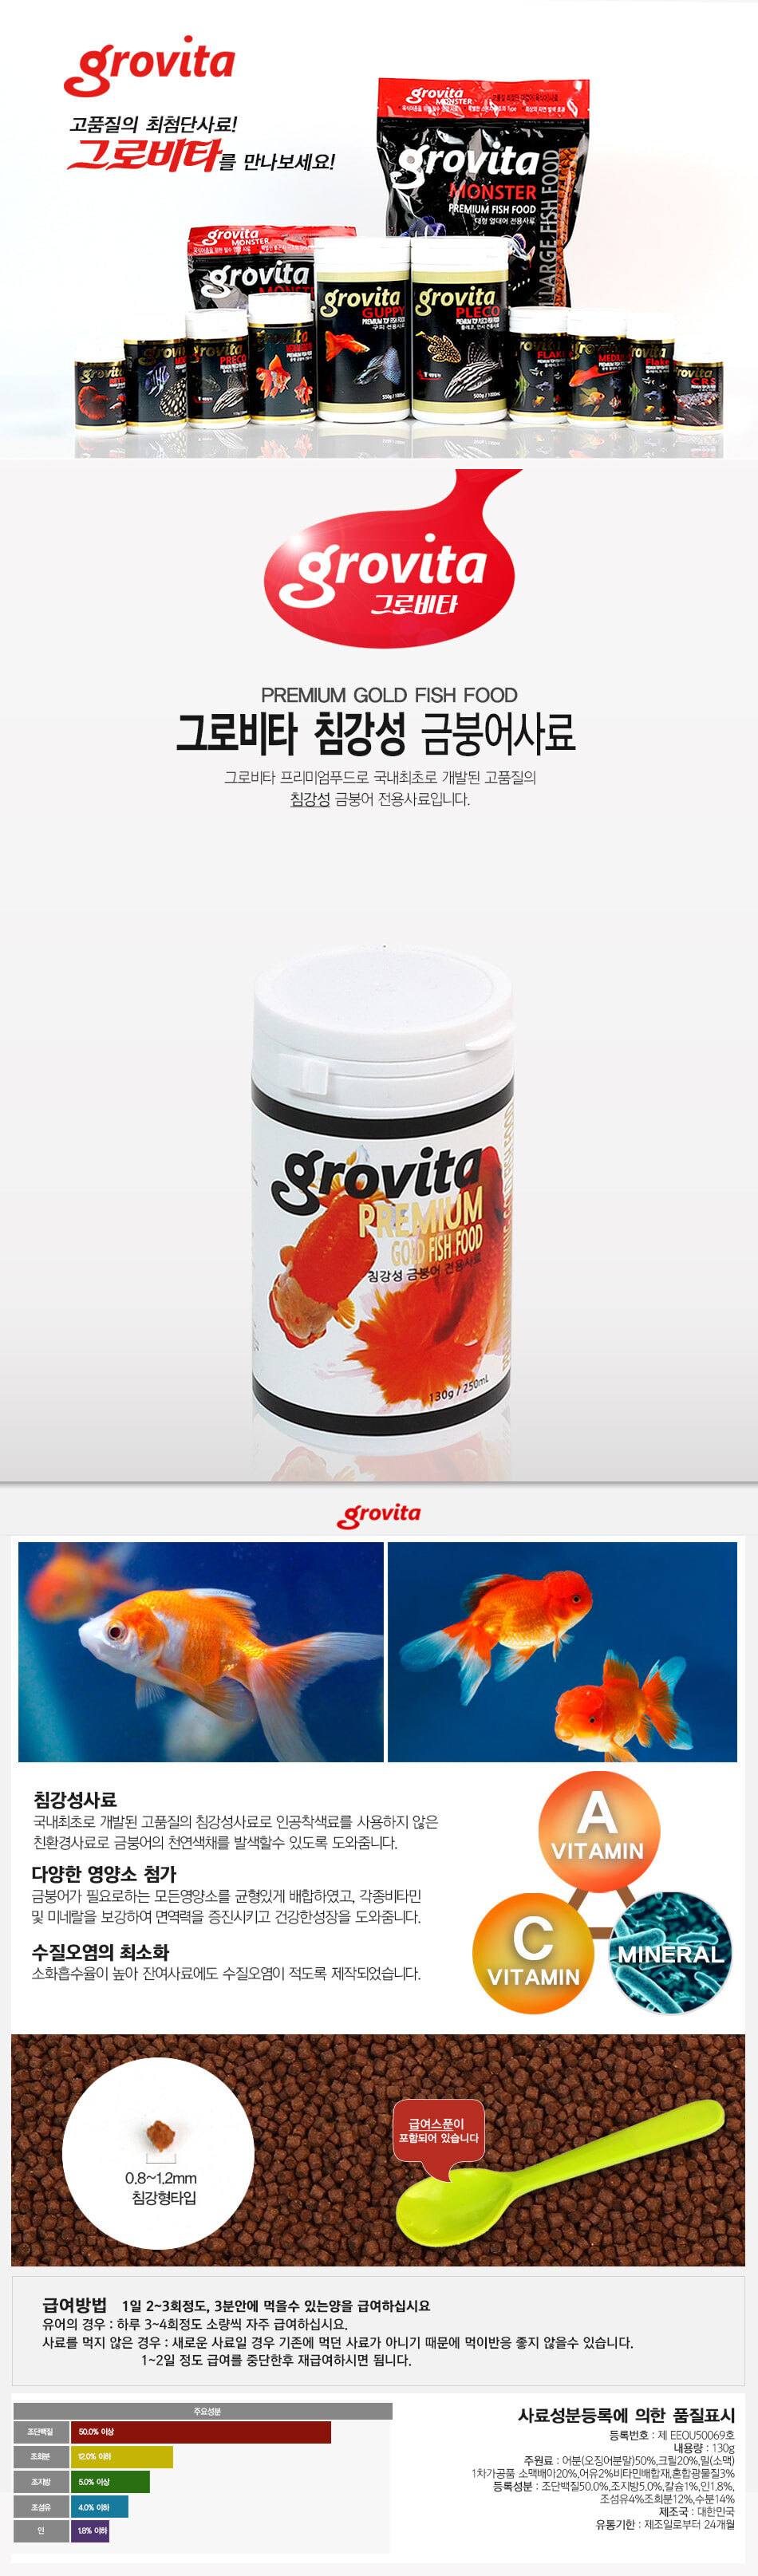 Grovita_Premium_gold_fish_D.jpg